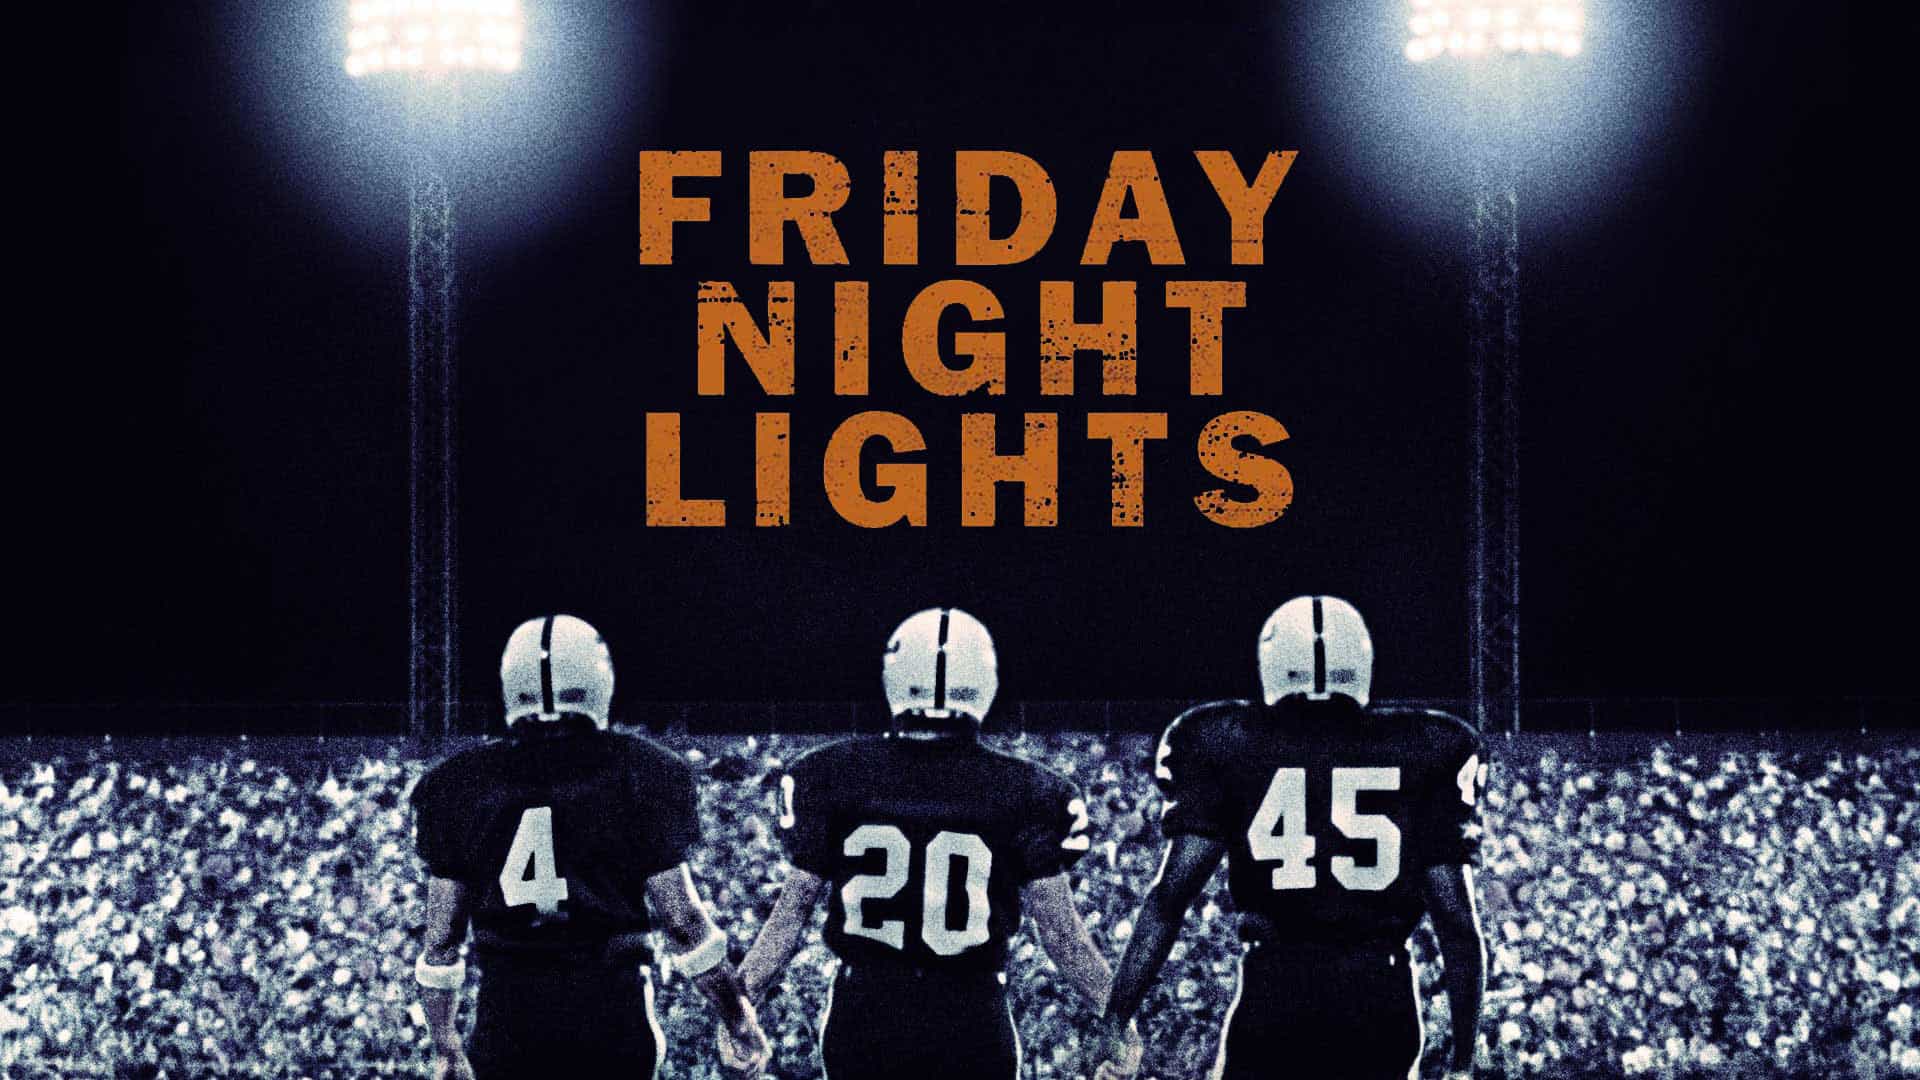 friday night lights movie cover